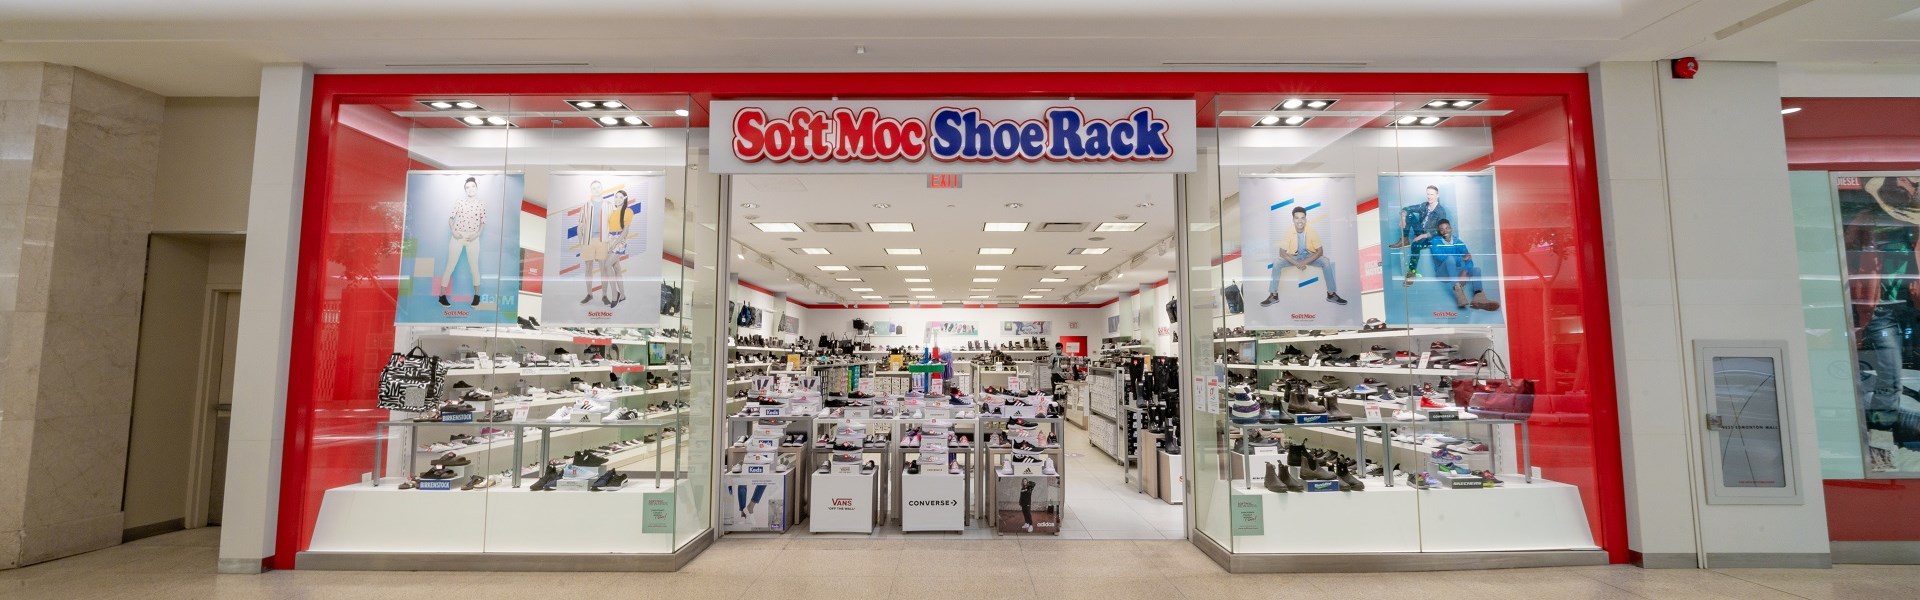 SoftMoc Shoe Rack